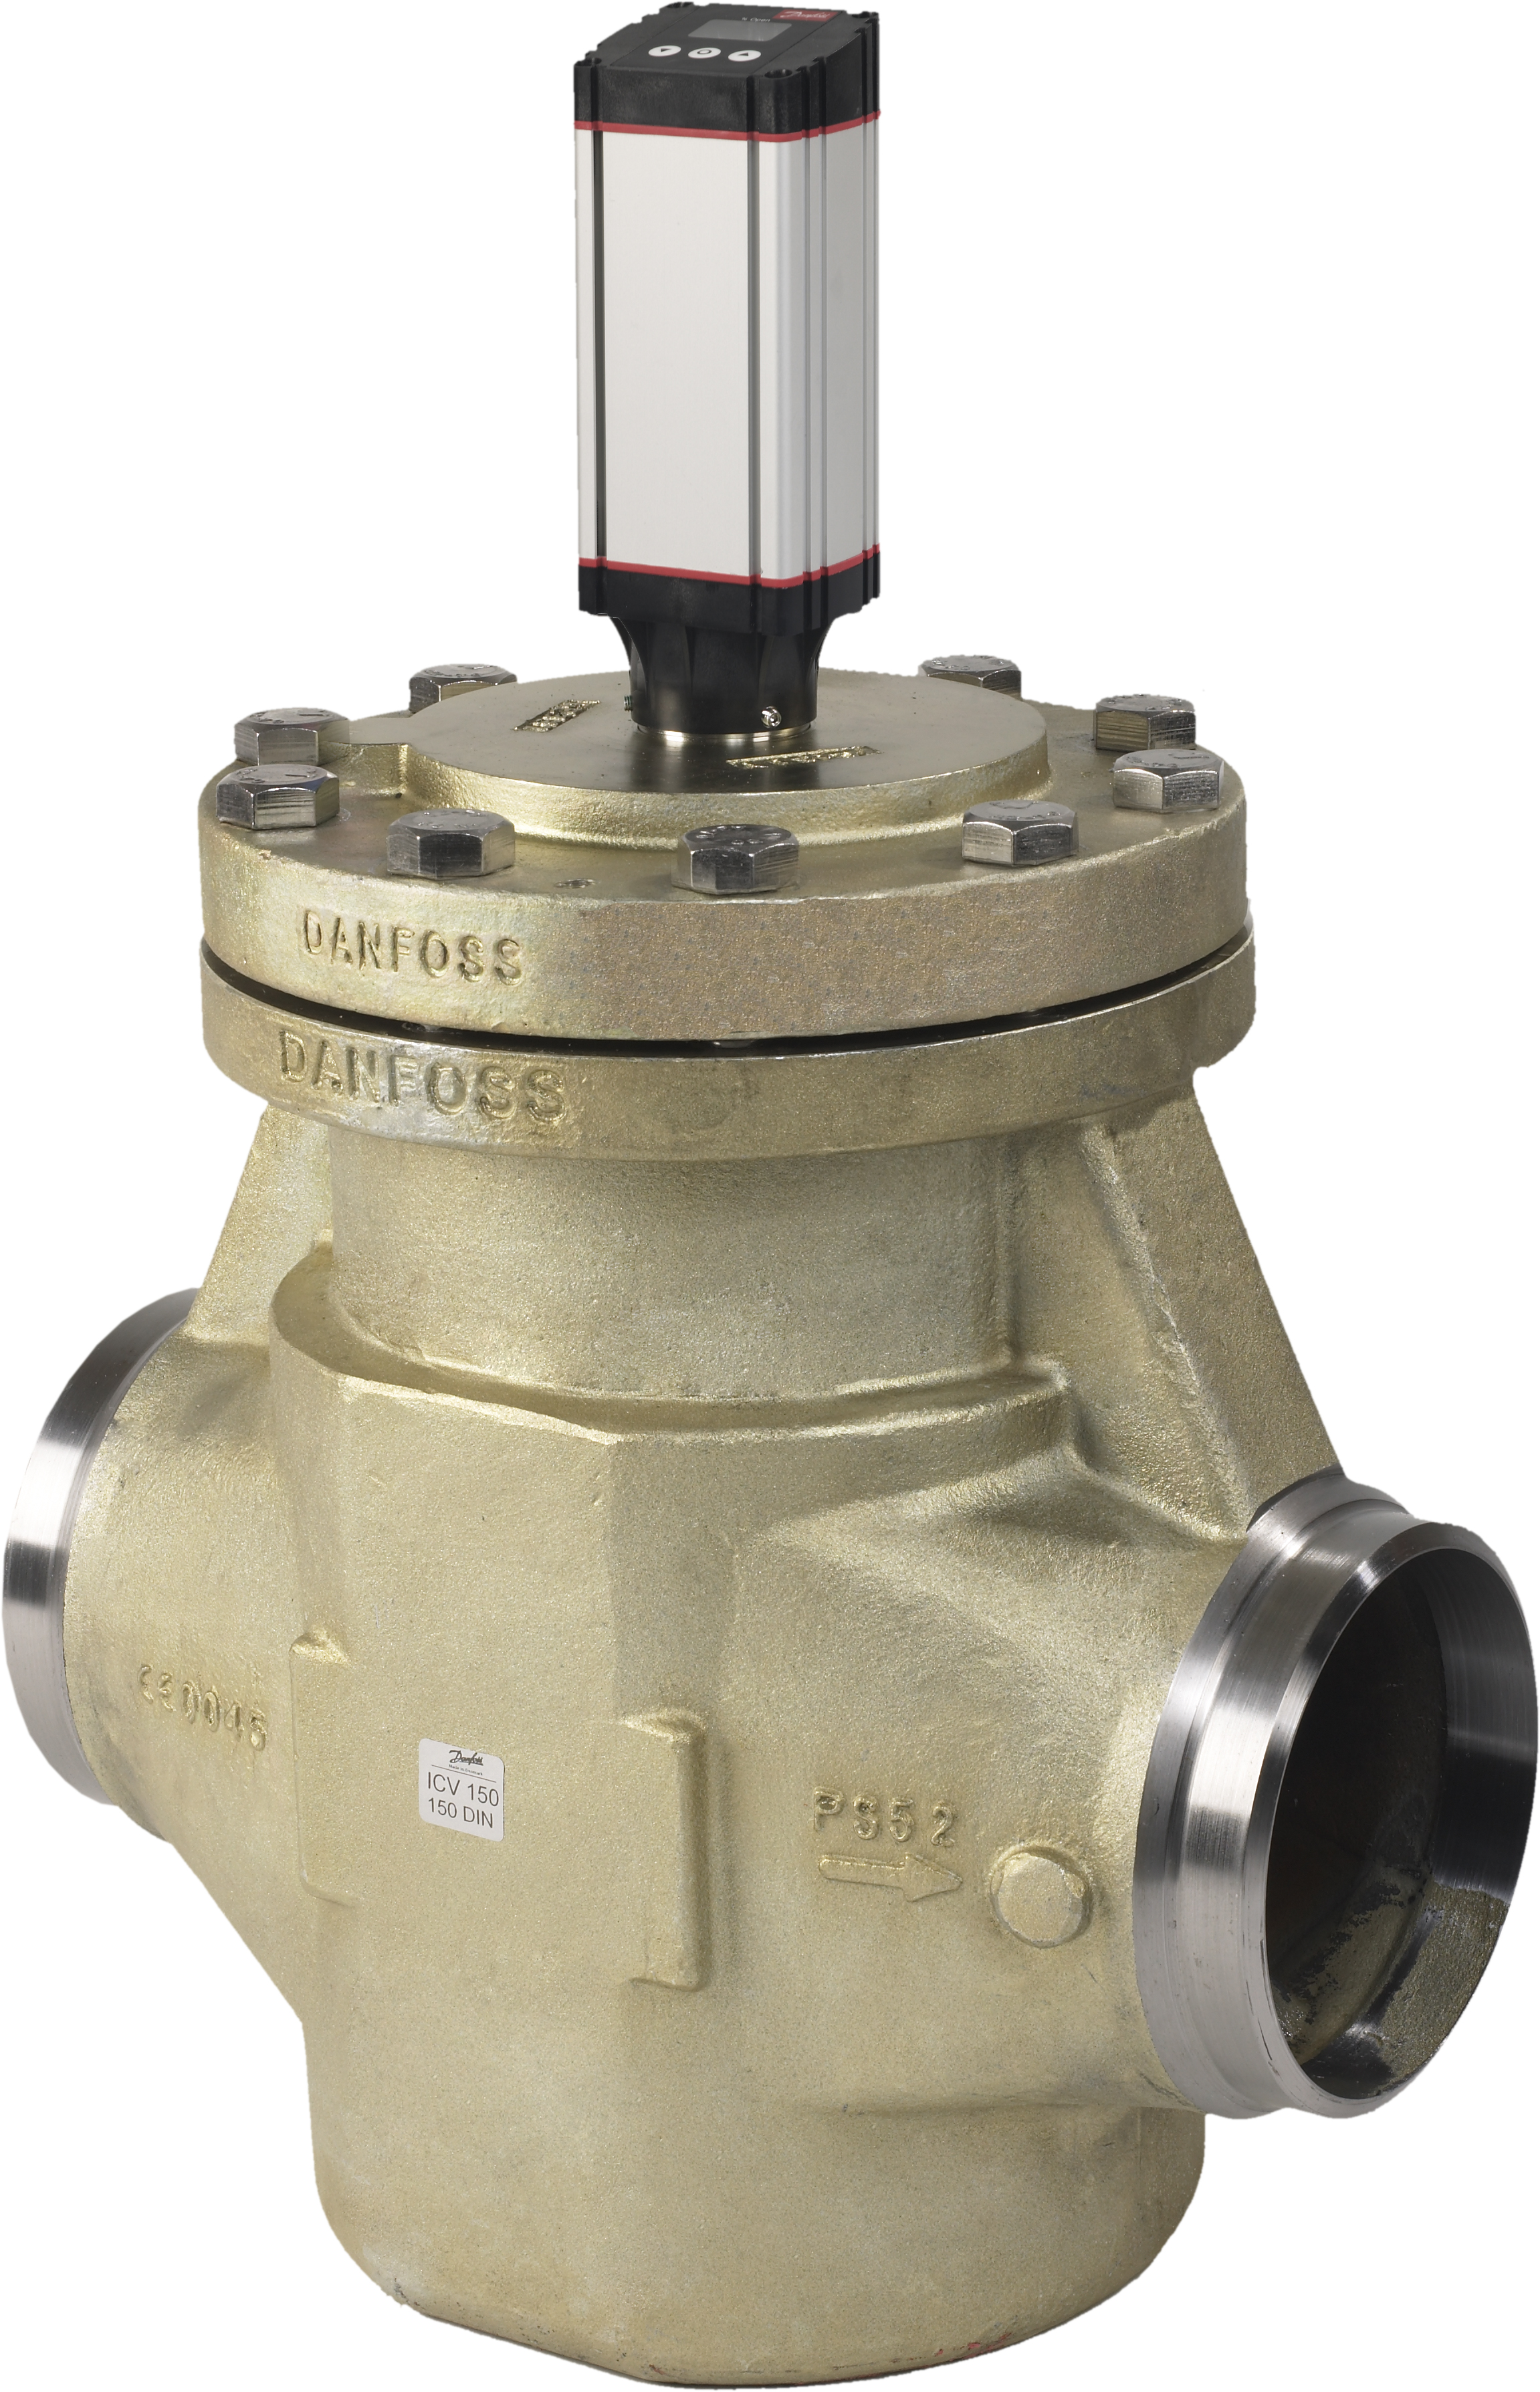 Motor operated valve, ICM 125, Steel